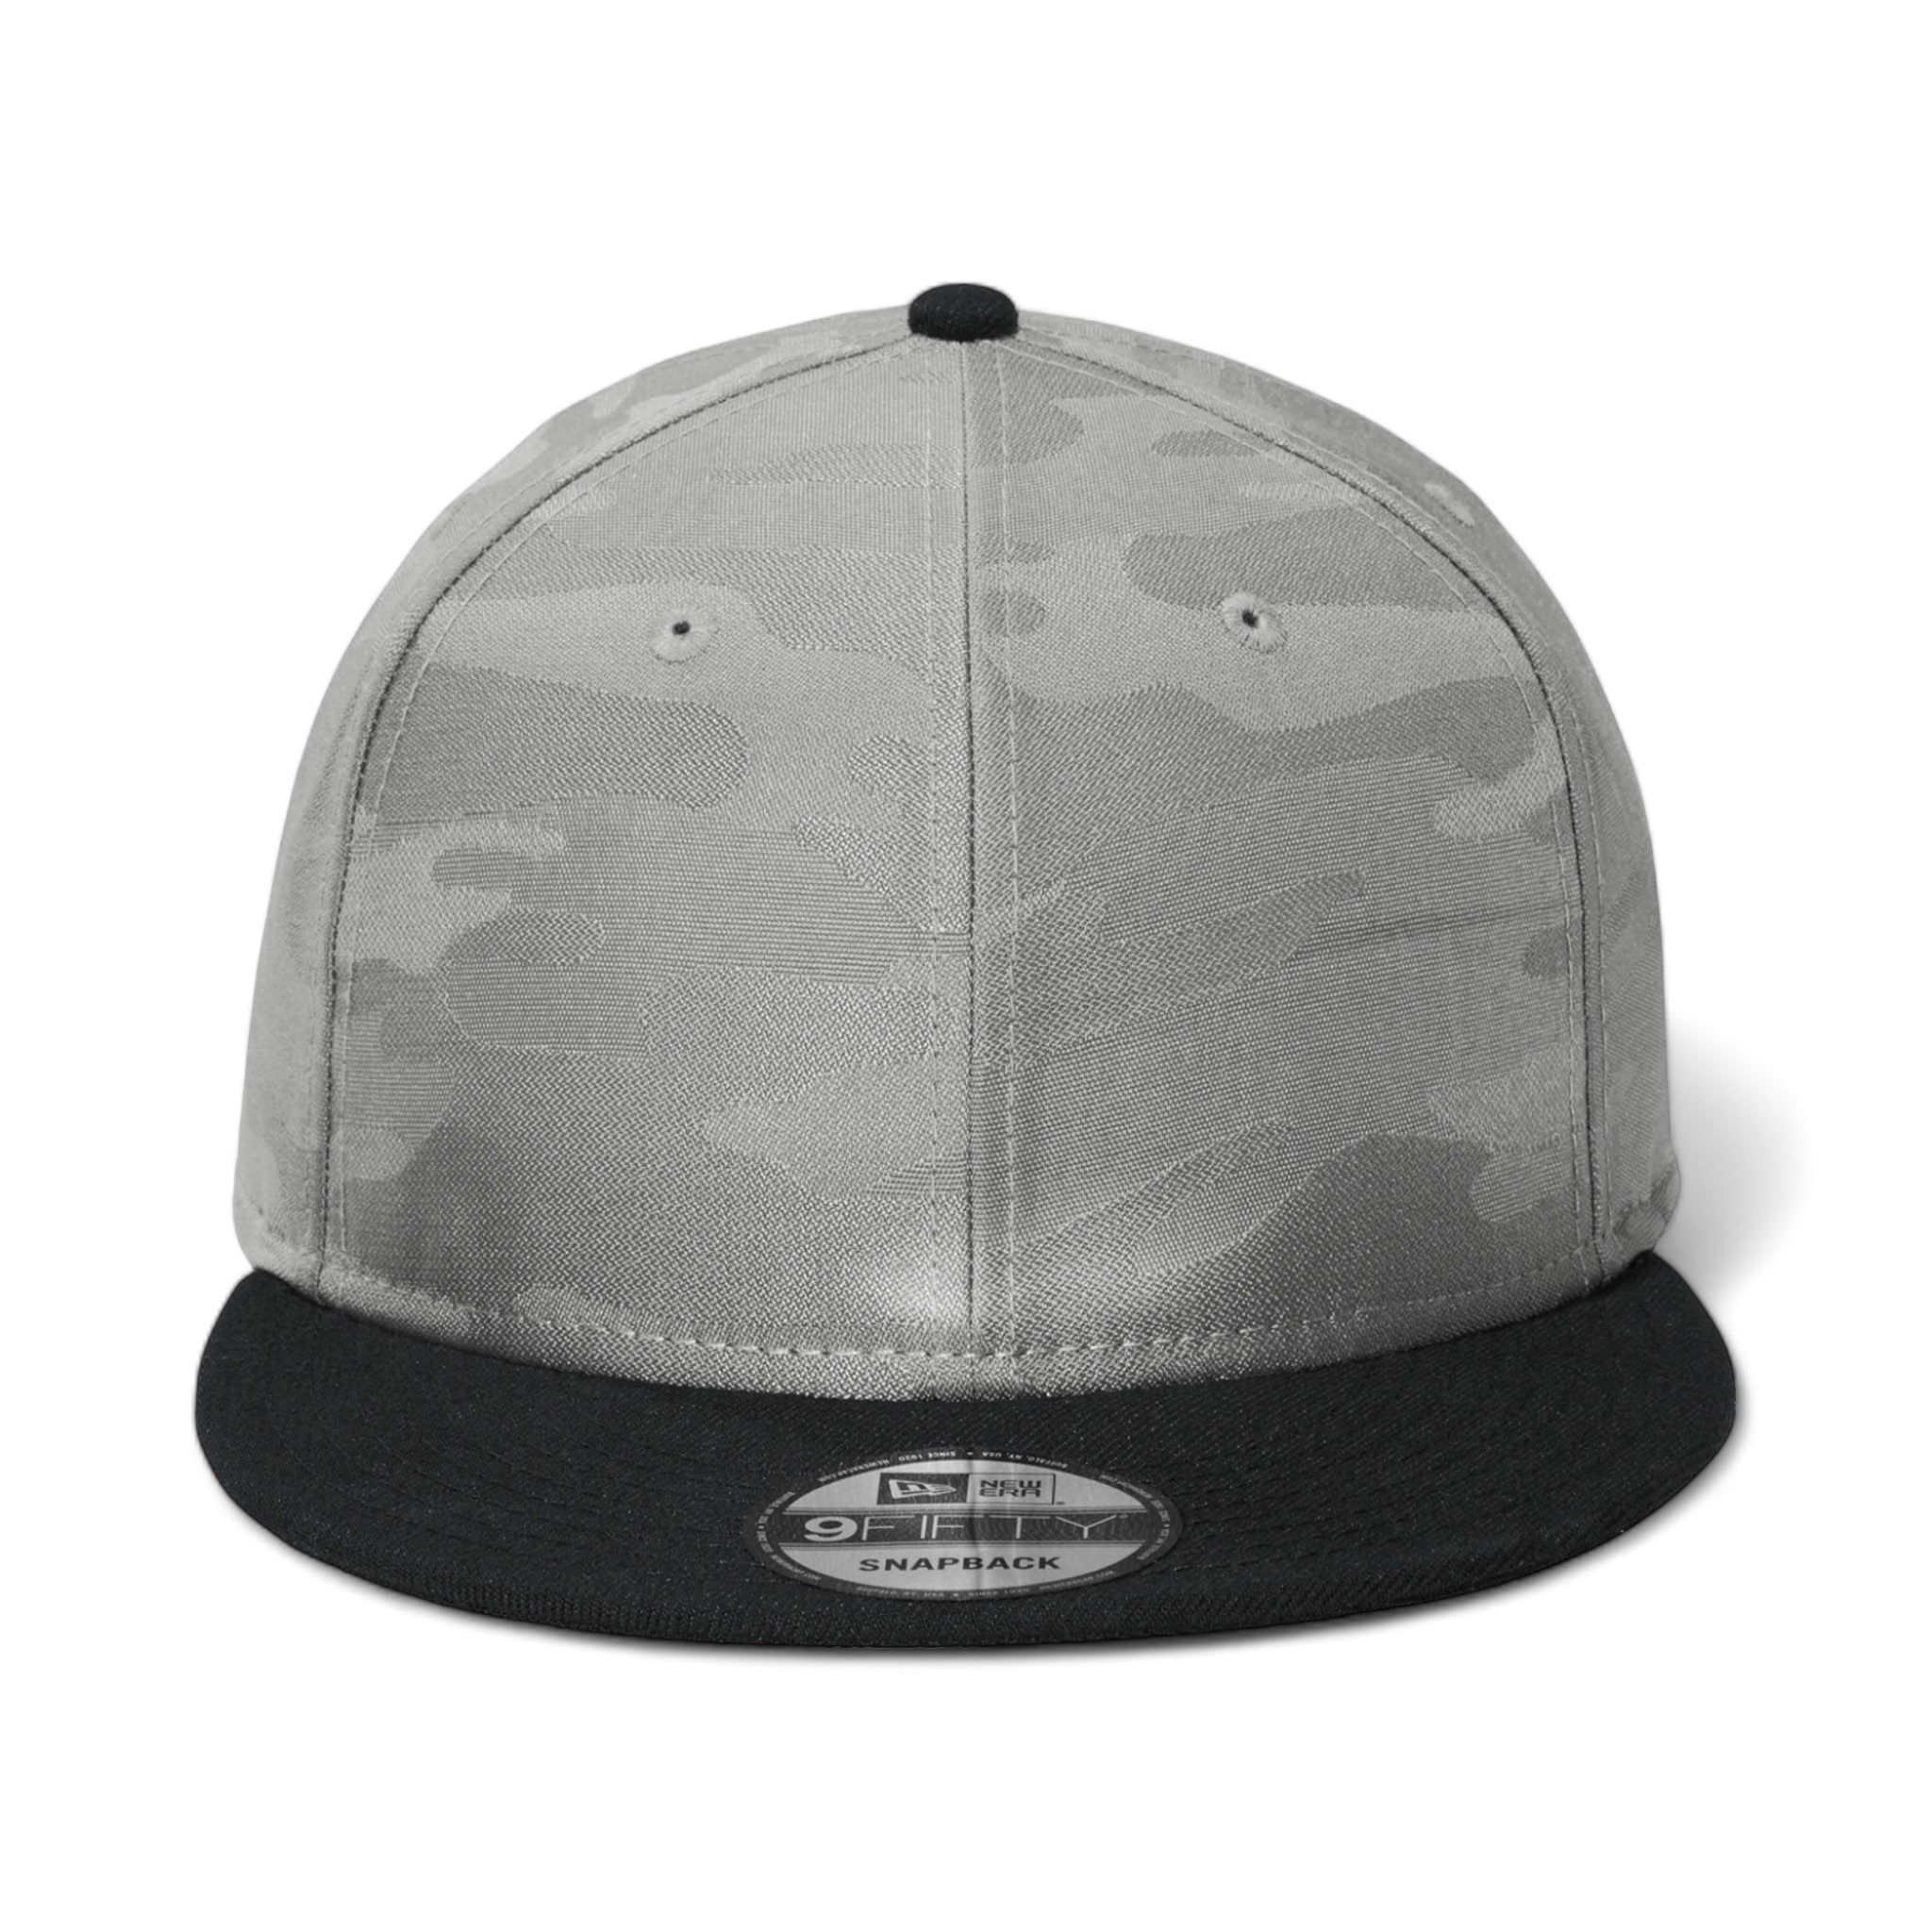 Front view of New Era NE407 custom hat in black and rainstorm grey camo